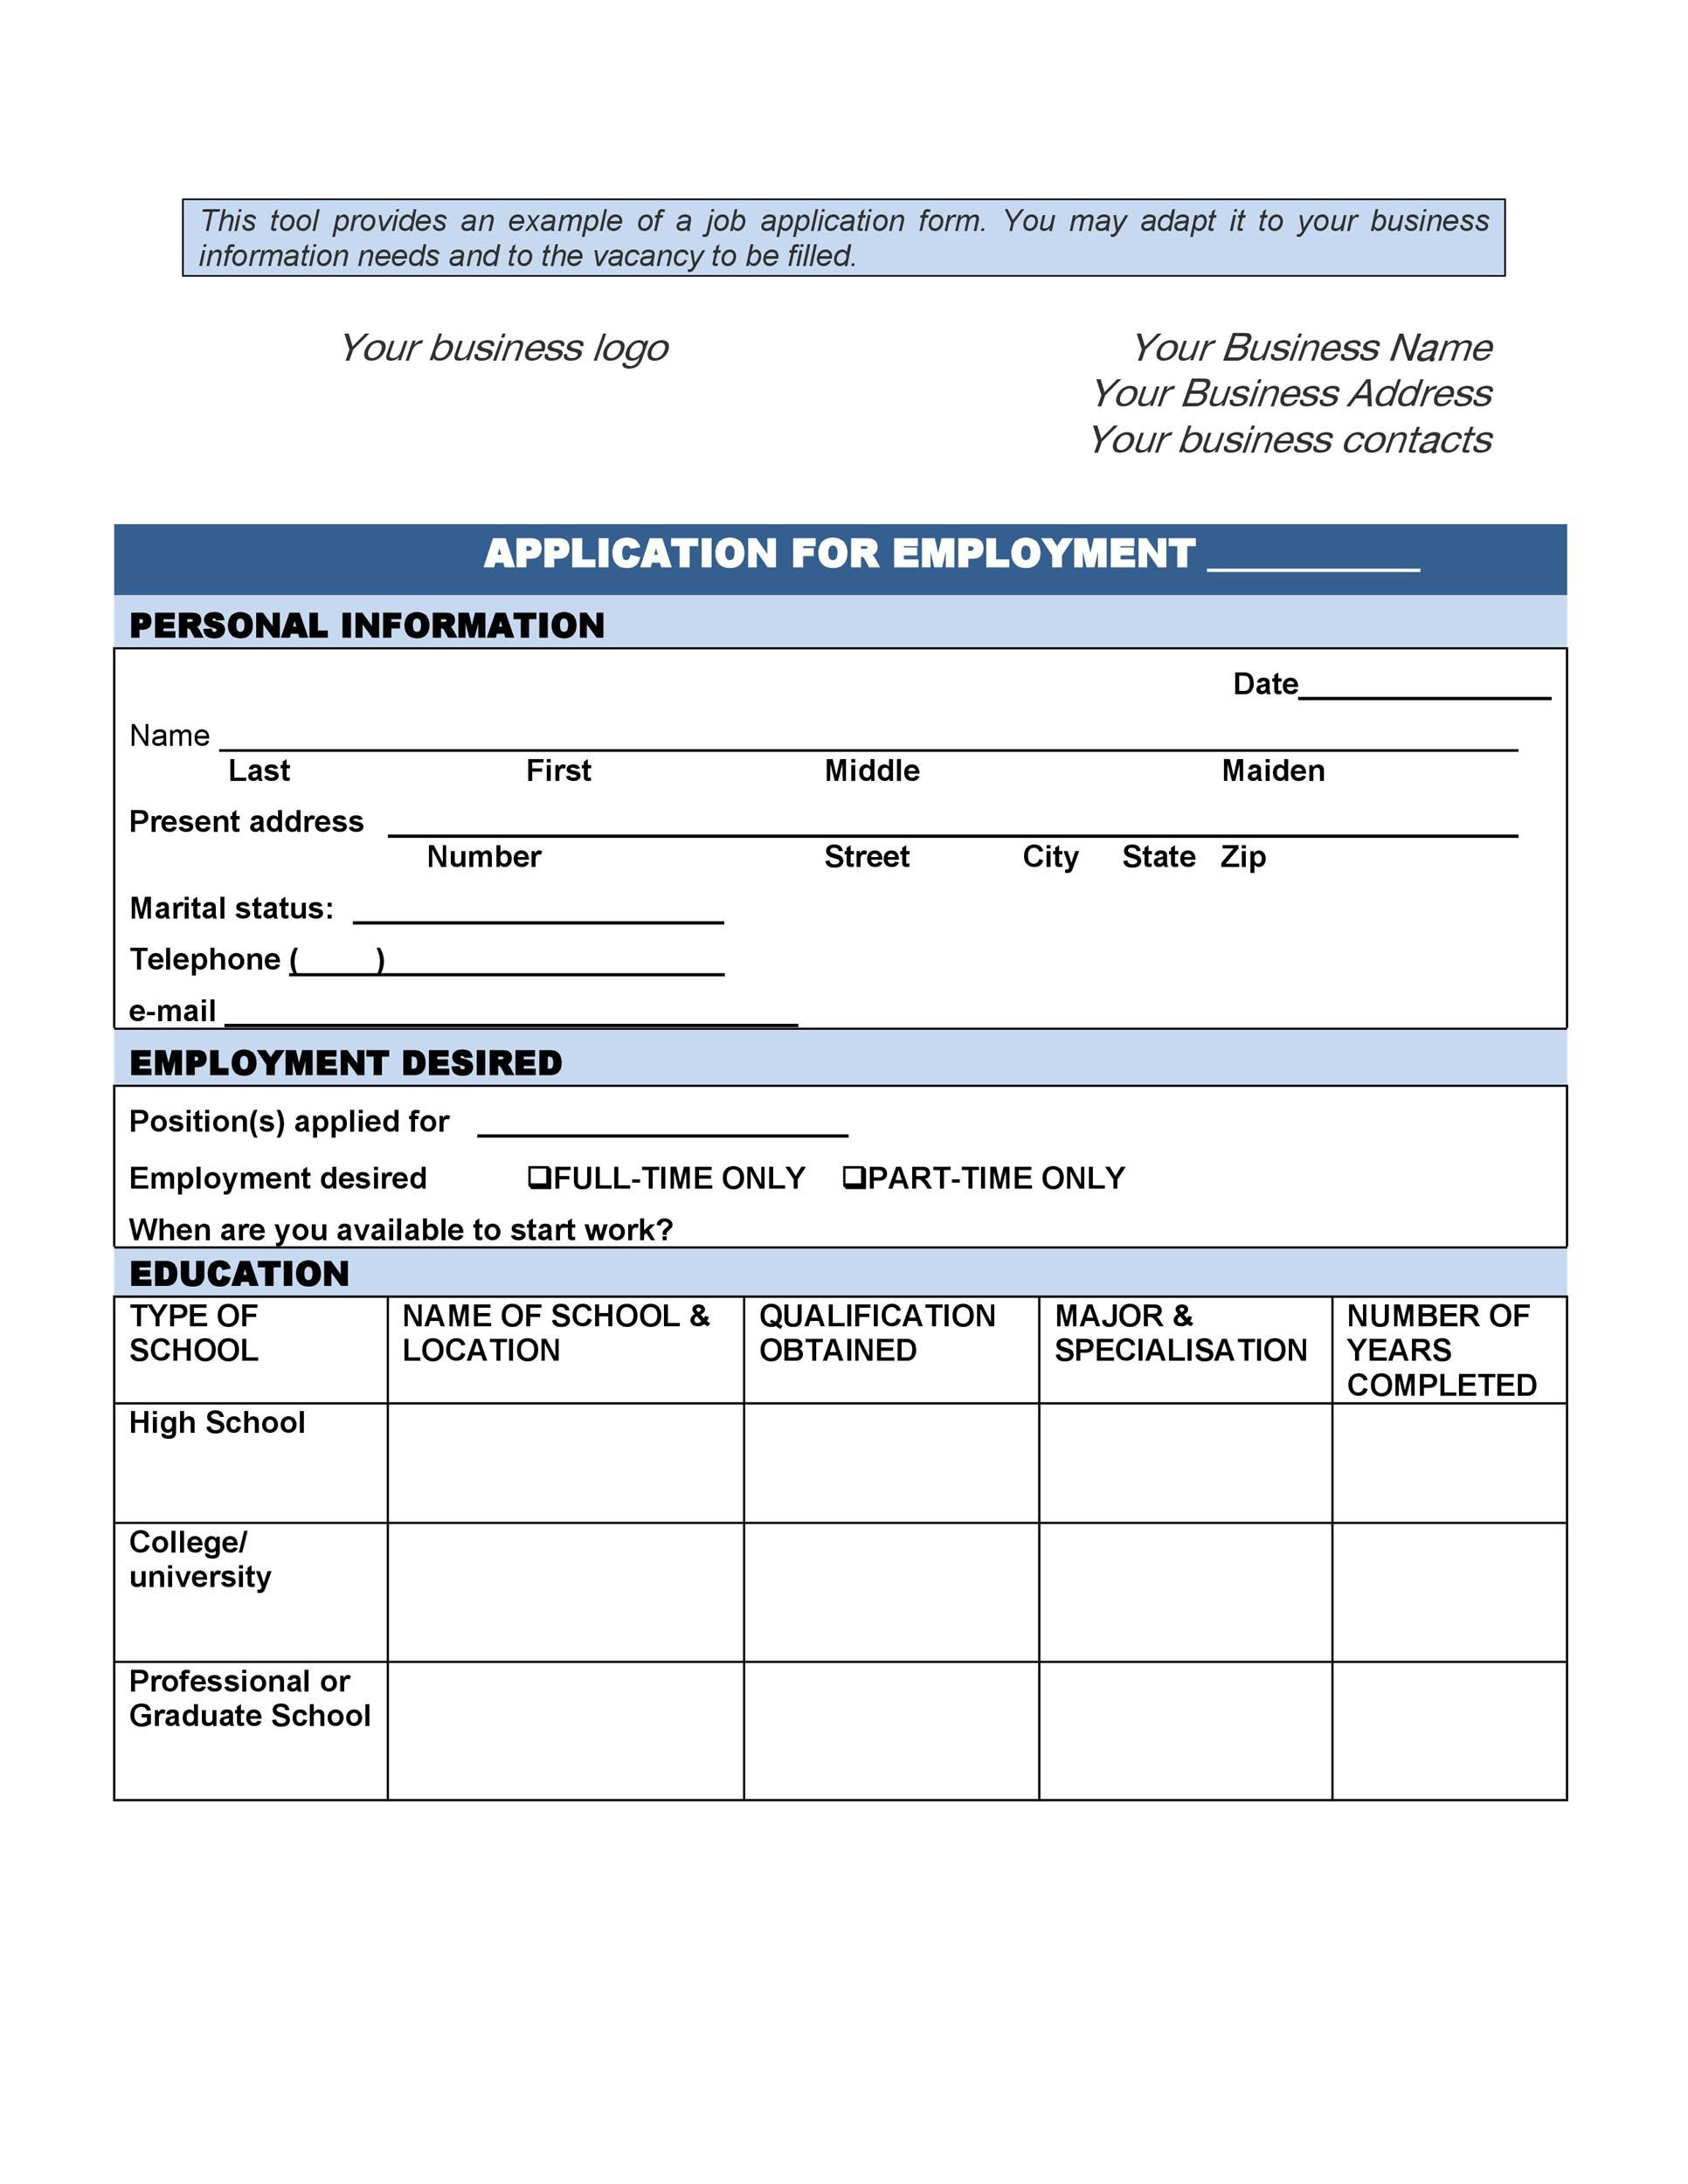 Canada summer jobs application form 2011